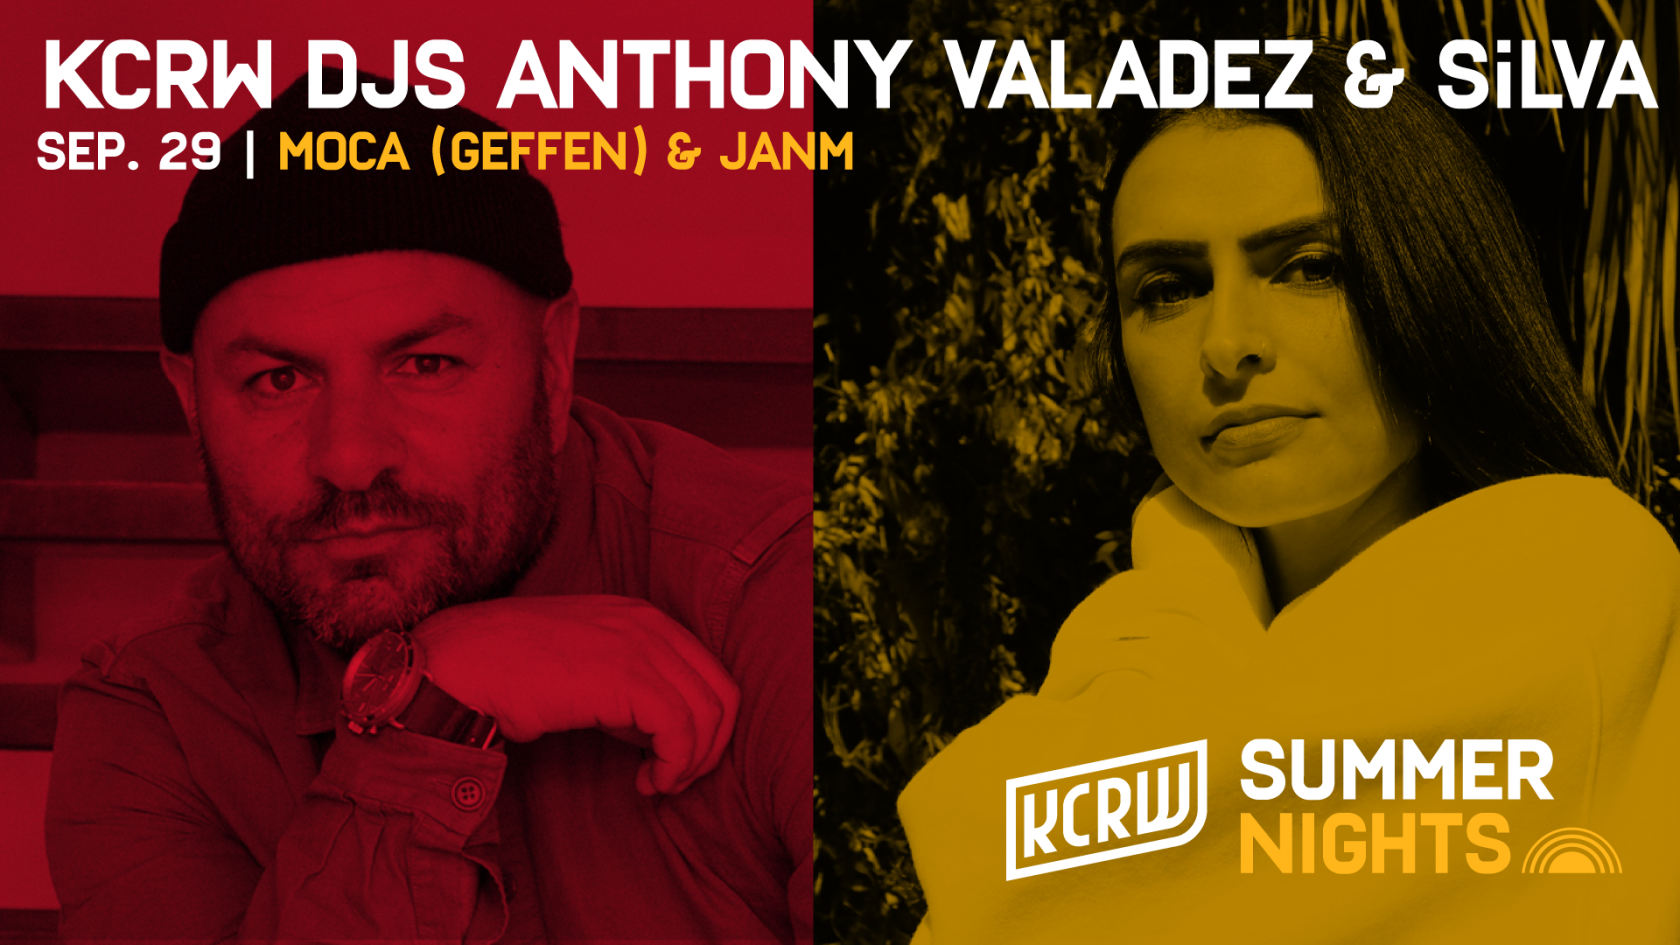 KCRW Summer Nights at MOCA Geffen & JANM with DJs Anthony Valadez + SiLVA